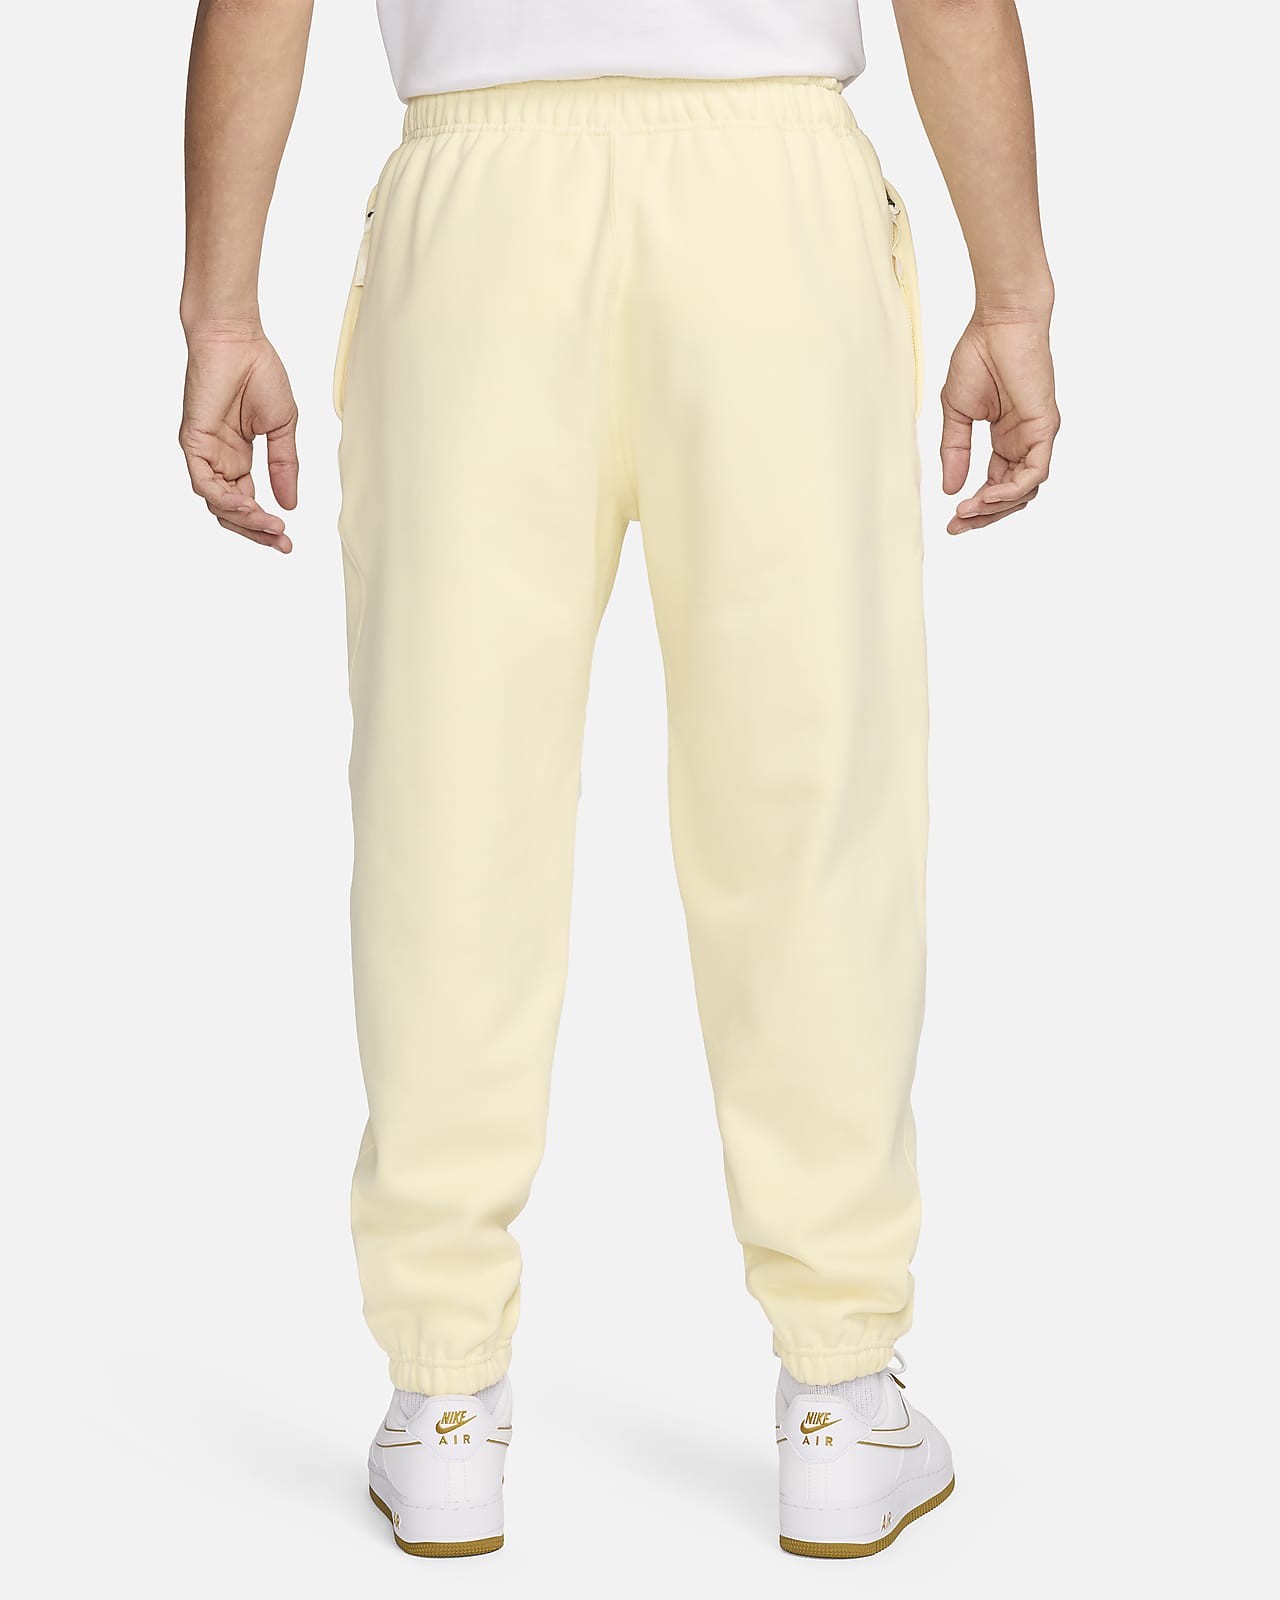 Nike Men's Solo Swoosh Heavy Fleece Pants Dark Grey Heather CW5460 063 - New